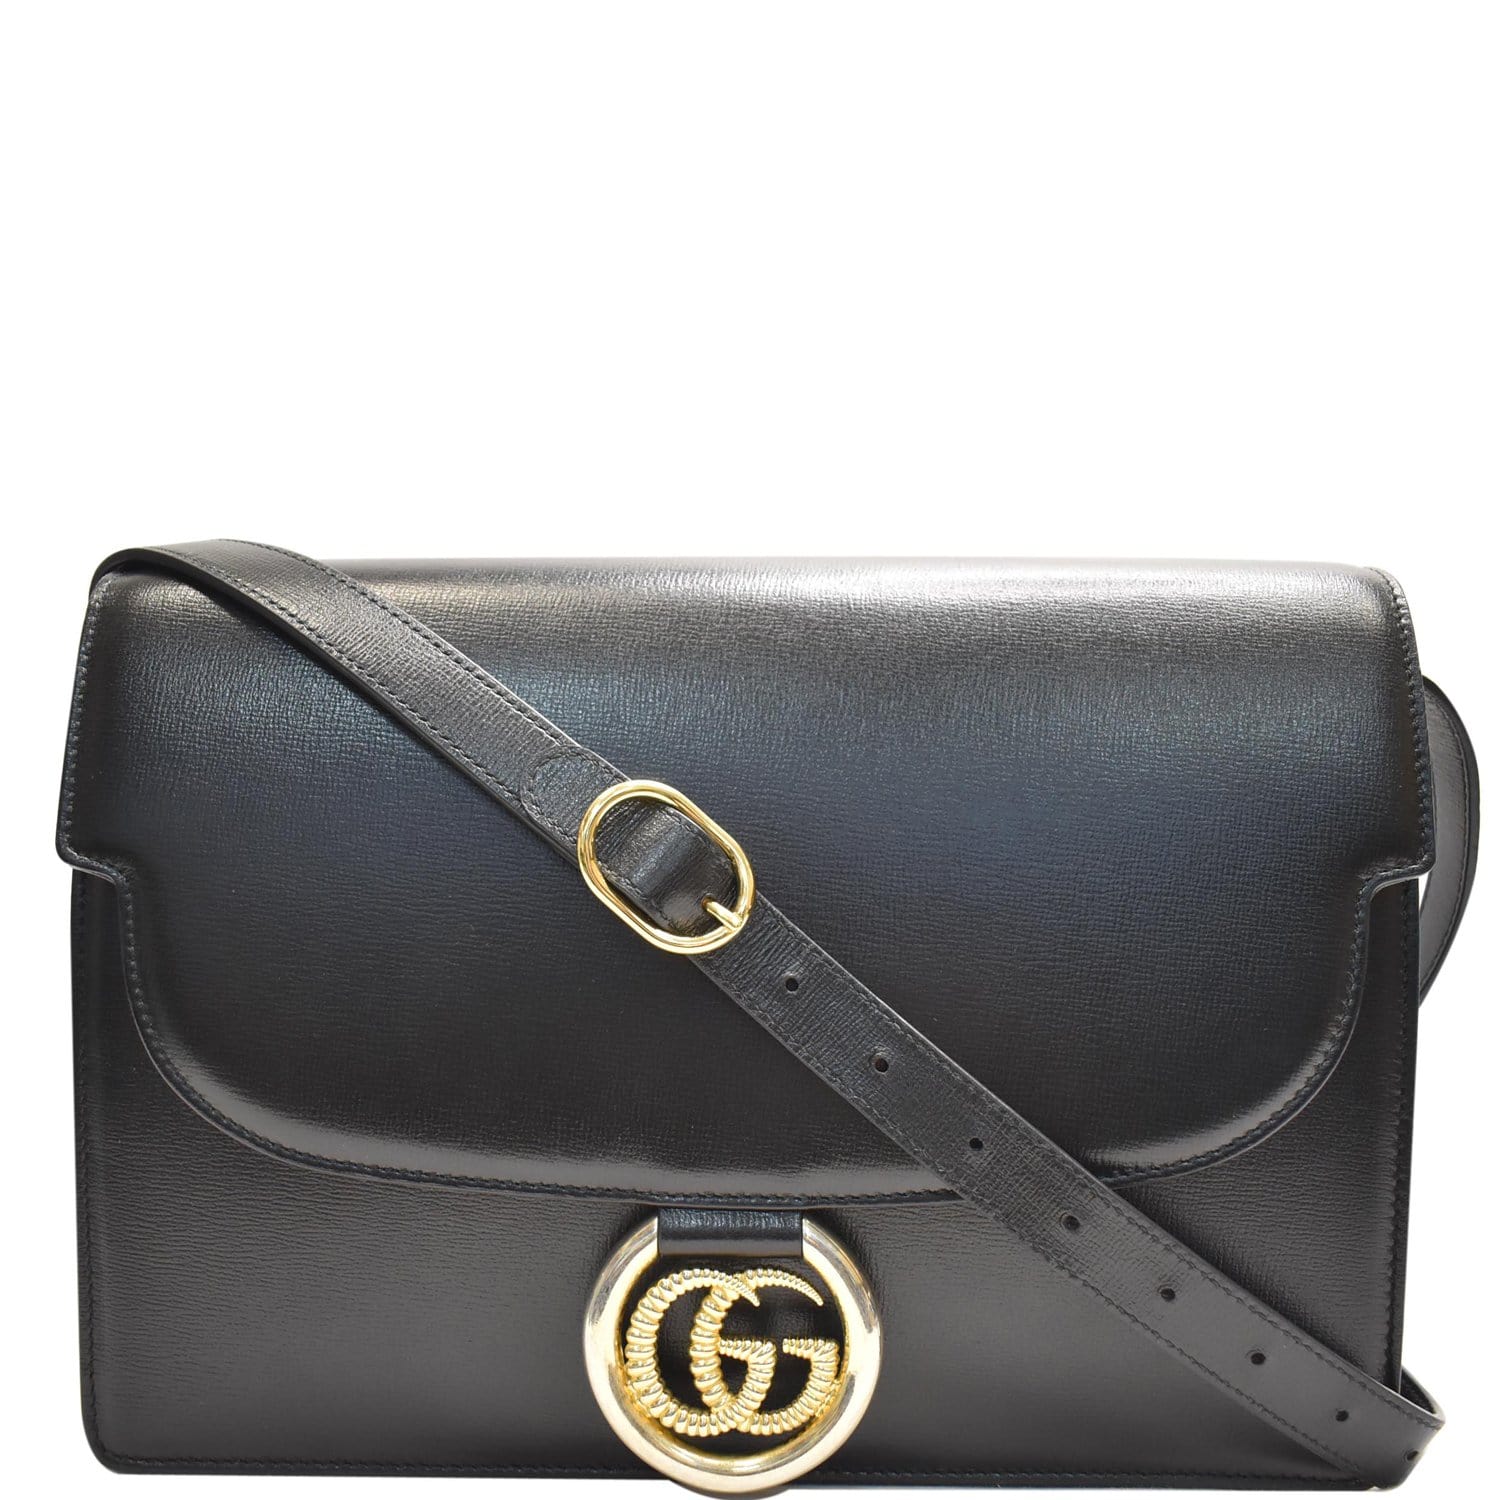 GUCCI Logo Plaque Leather Shoulder Bag Black 589471 - Final Sale